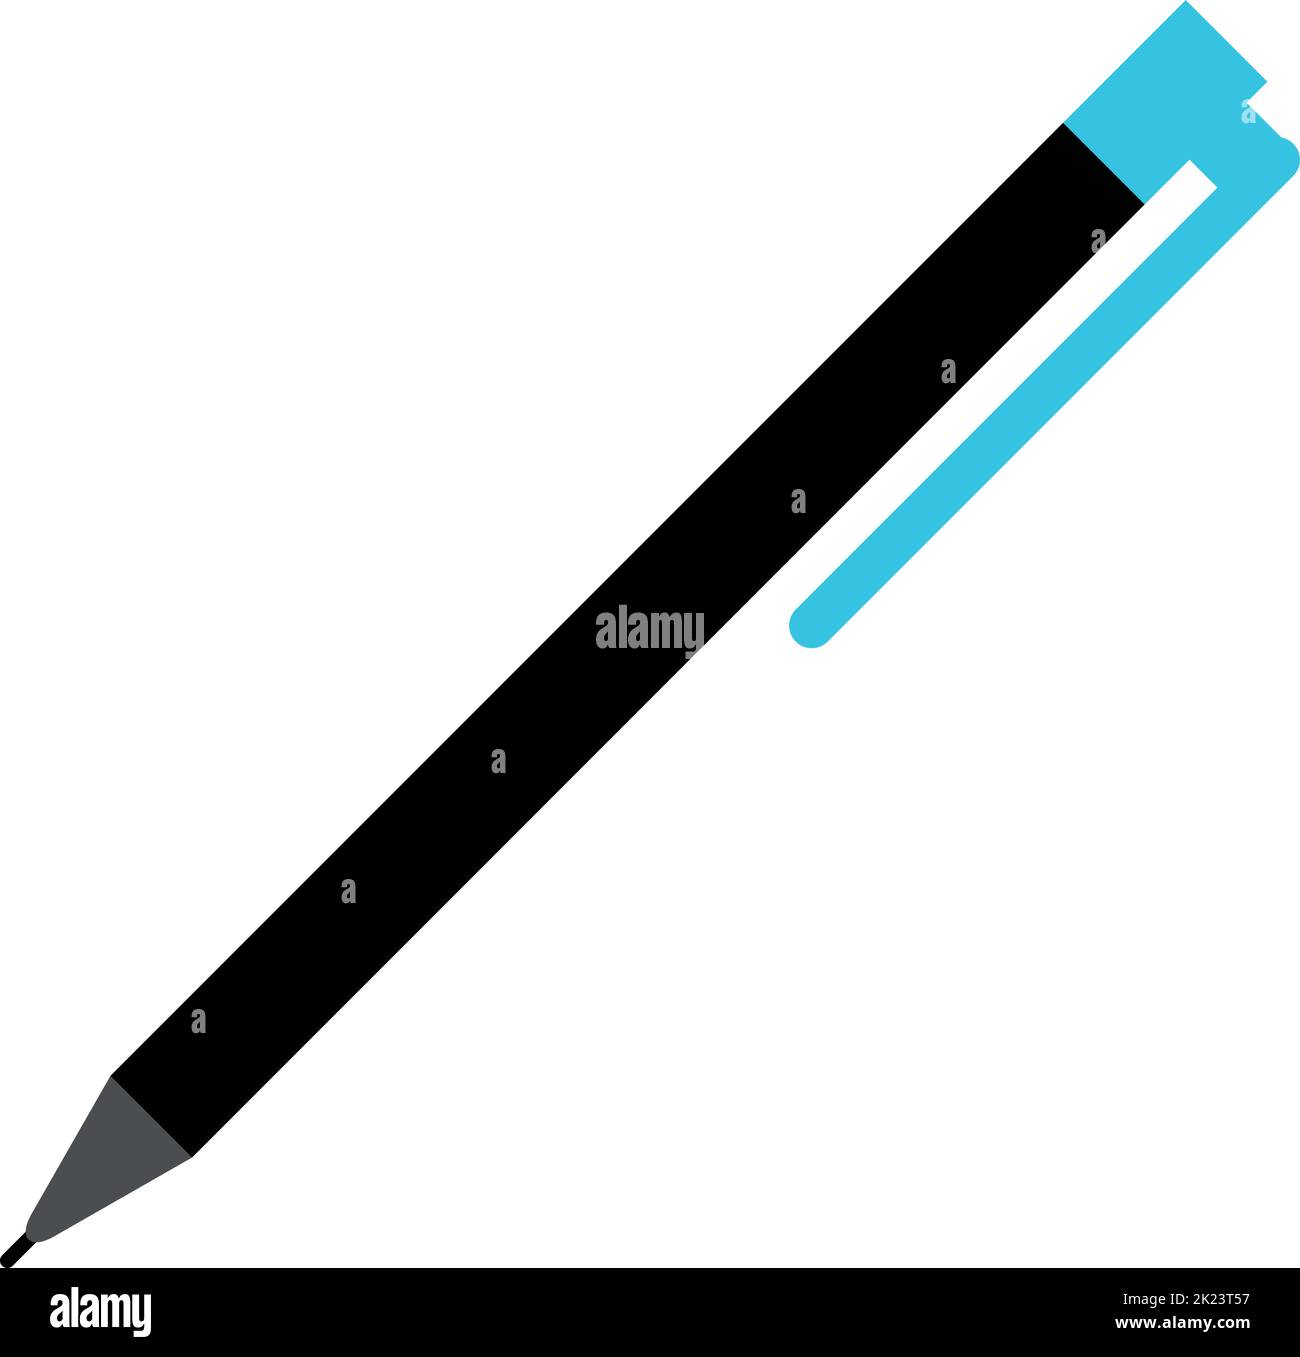 Blue plastic pen icon. Writing tool symbol Stock Vector